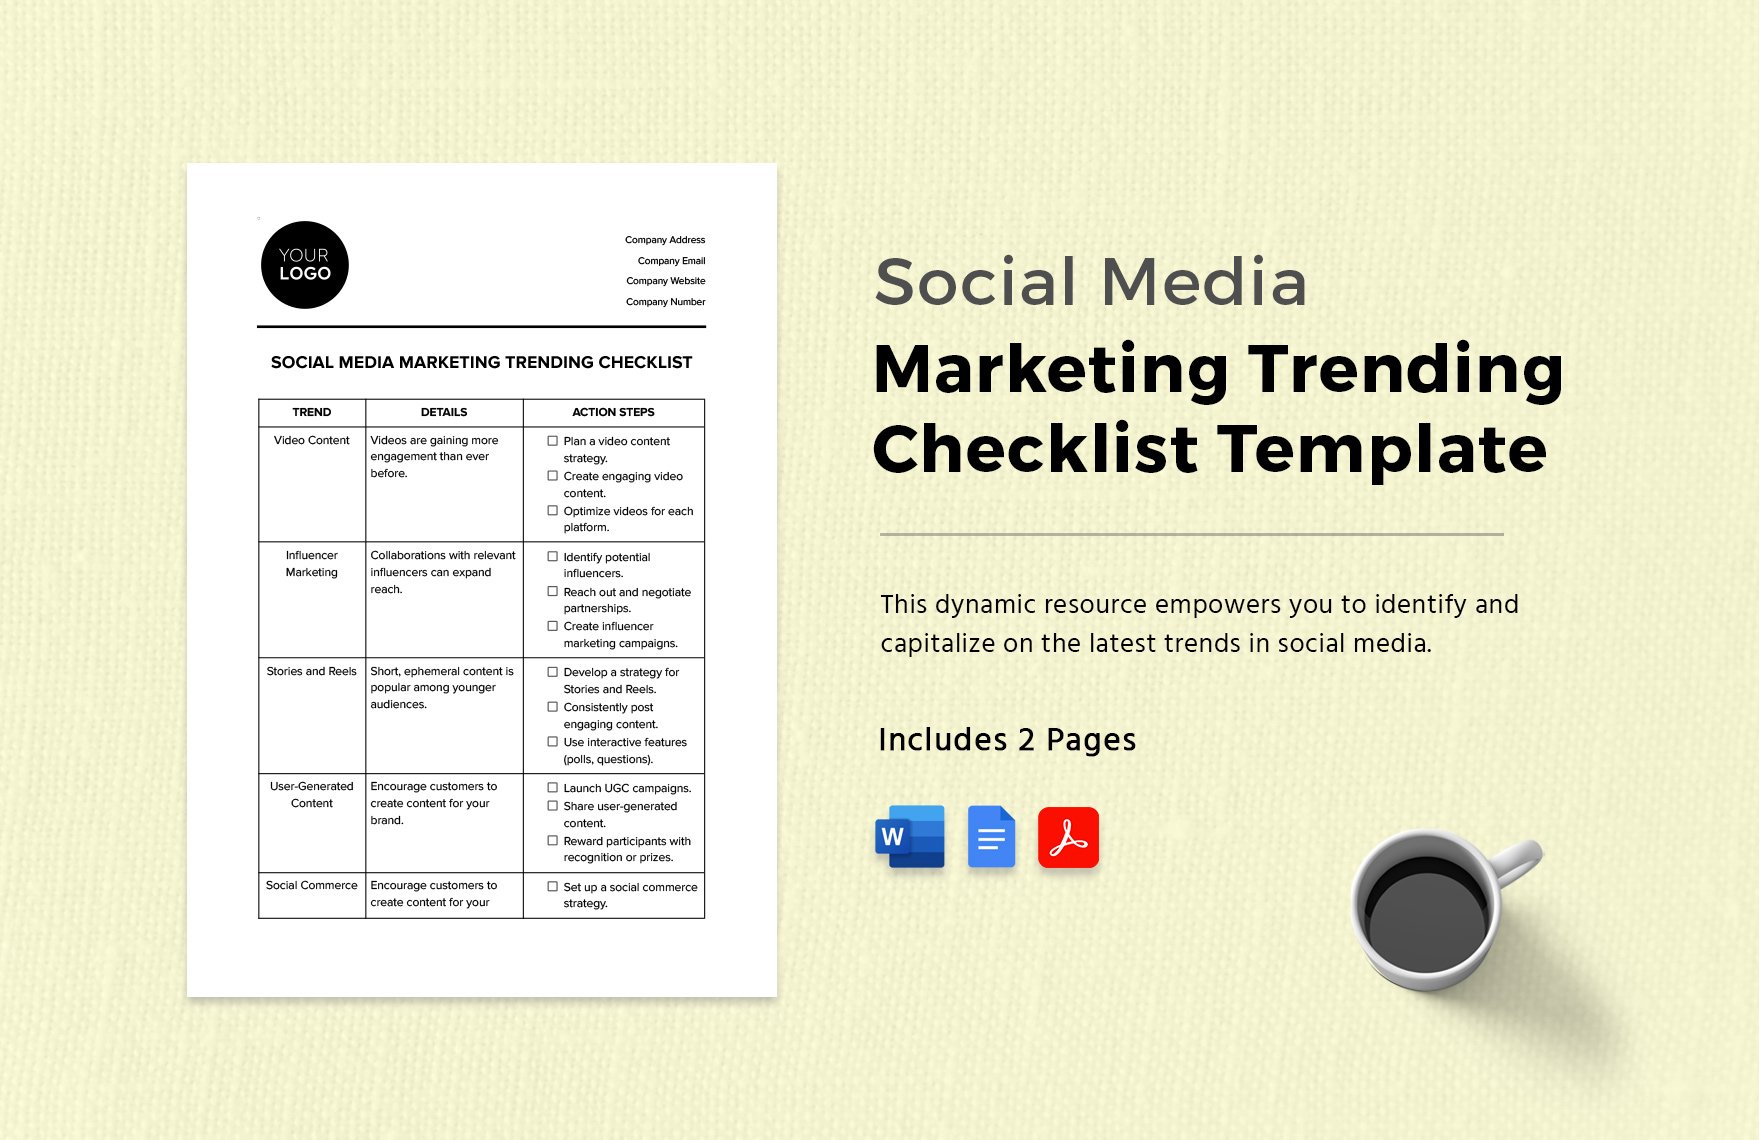 Social Media Marketing Trending Checklist Template in Word, Google Docs, PDF